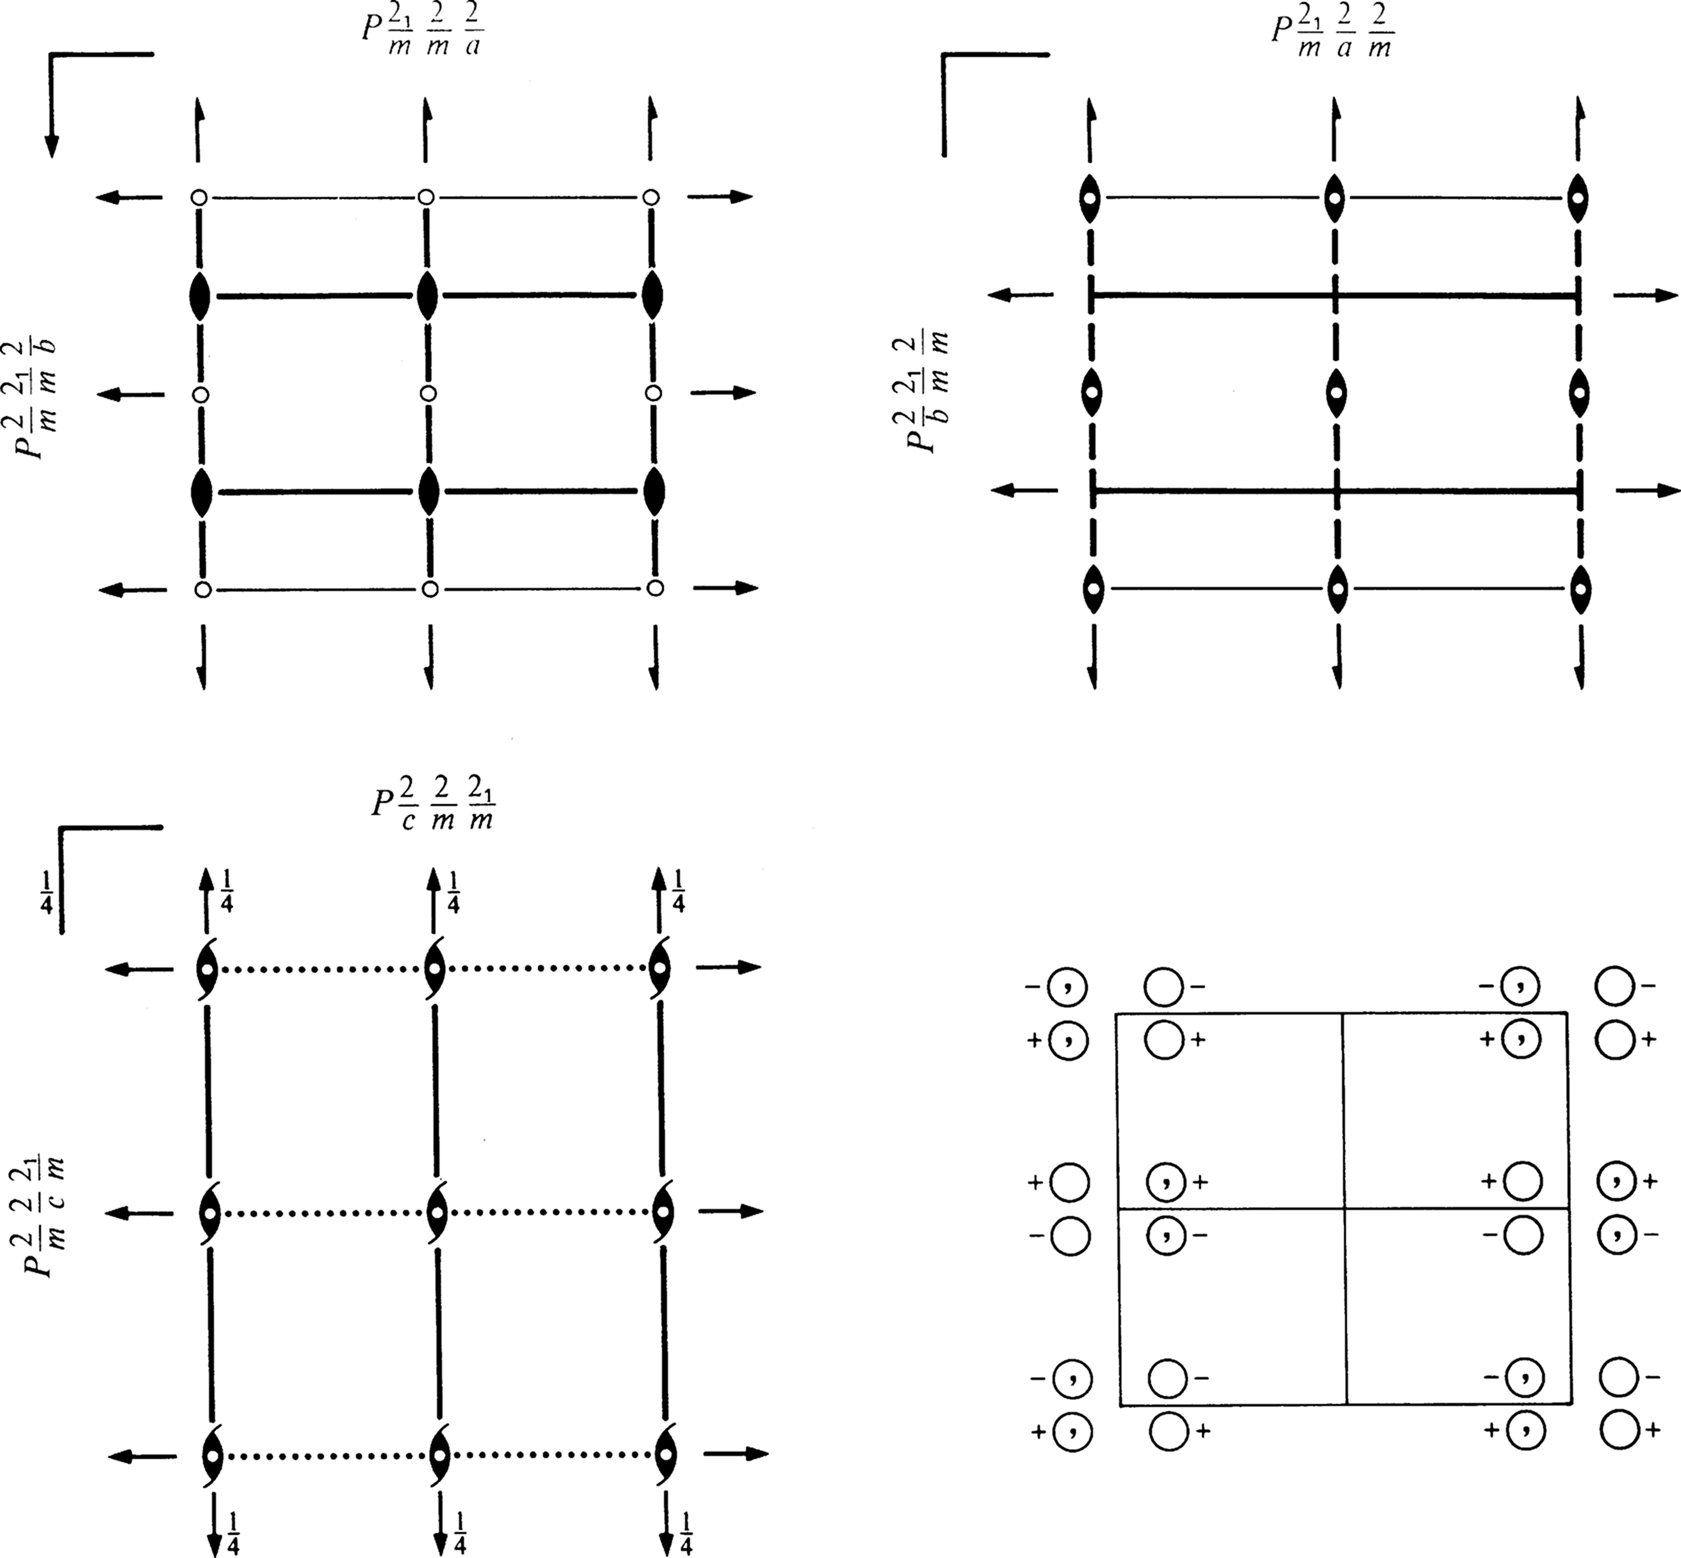 symmetry group diagram